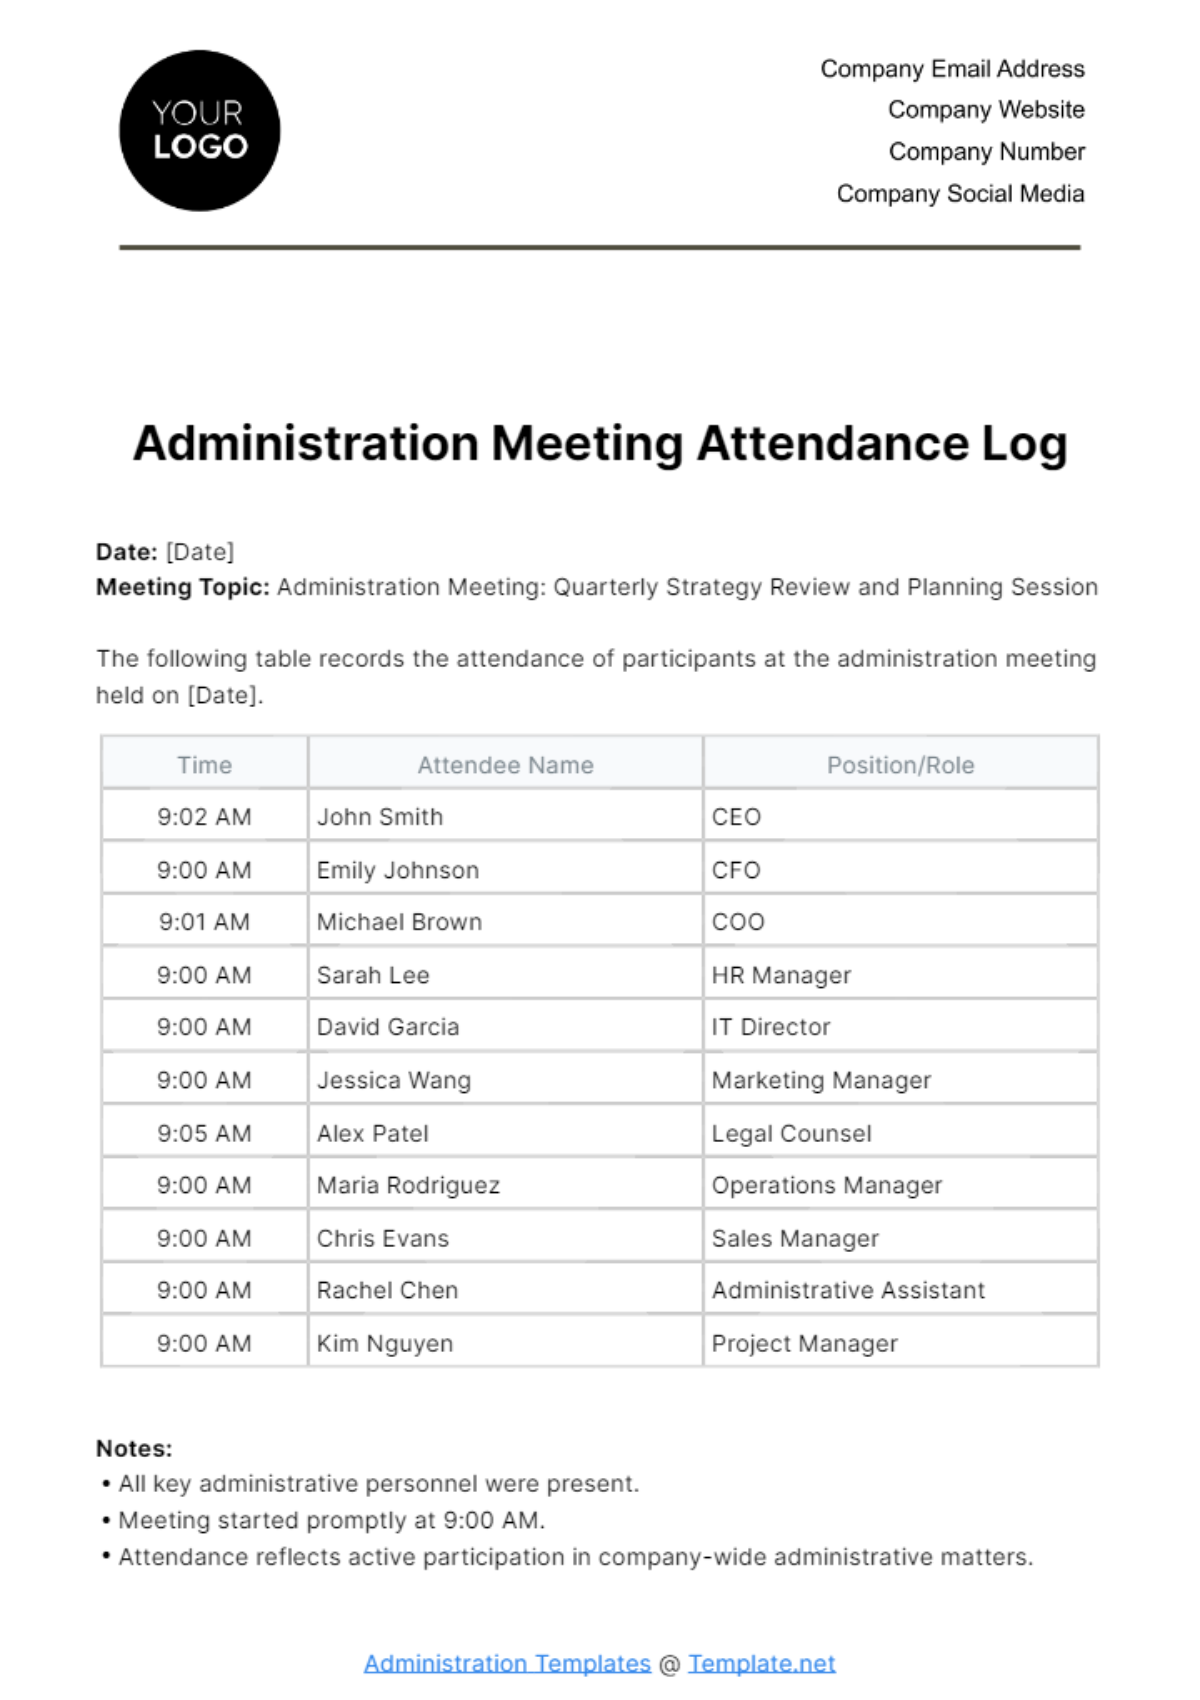 Administration Meeting Attendance Log Template